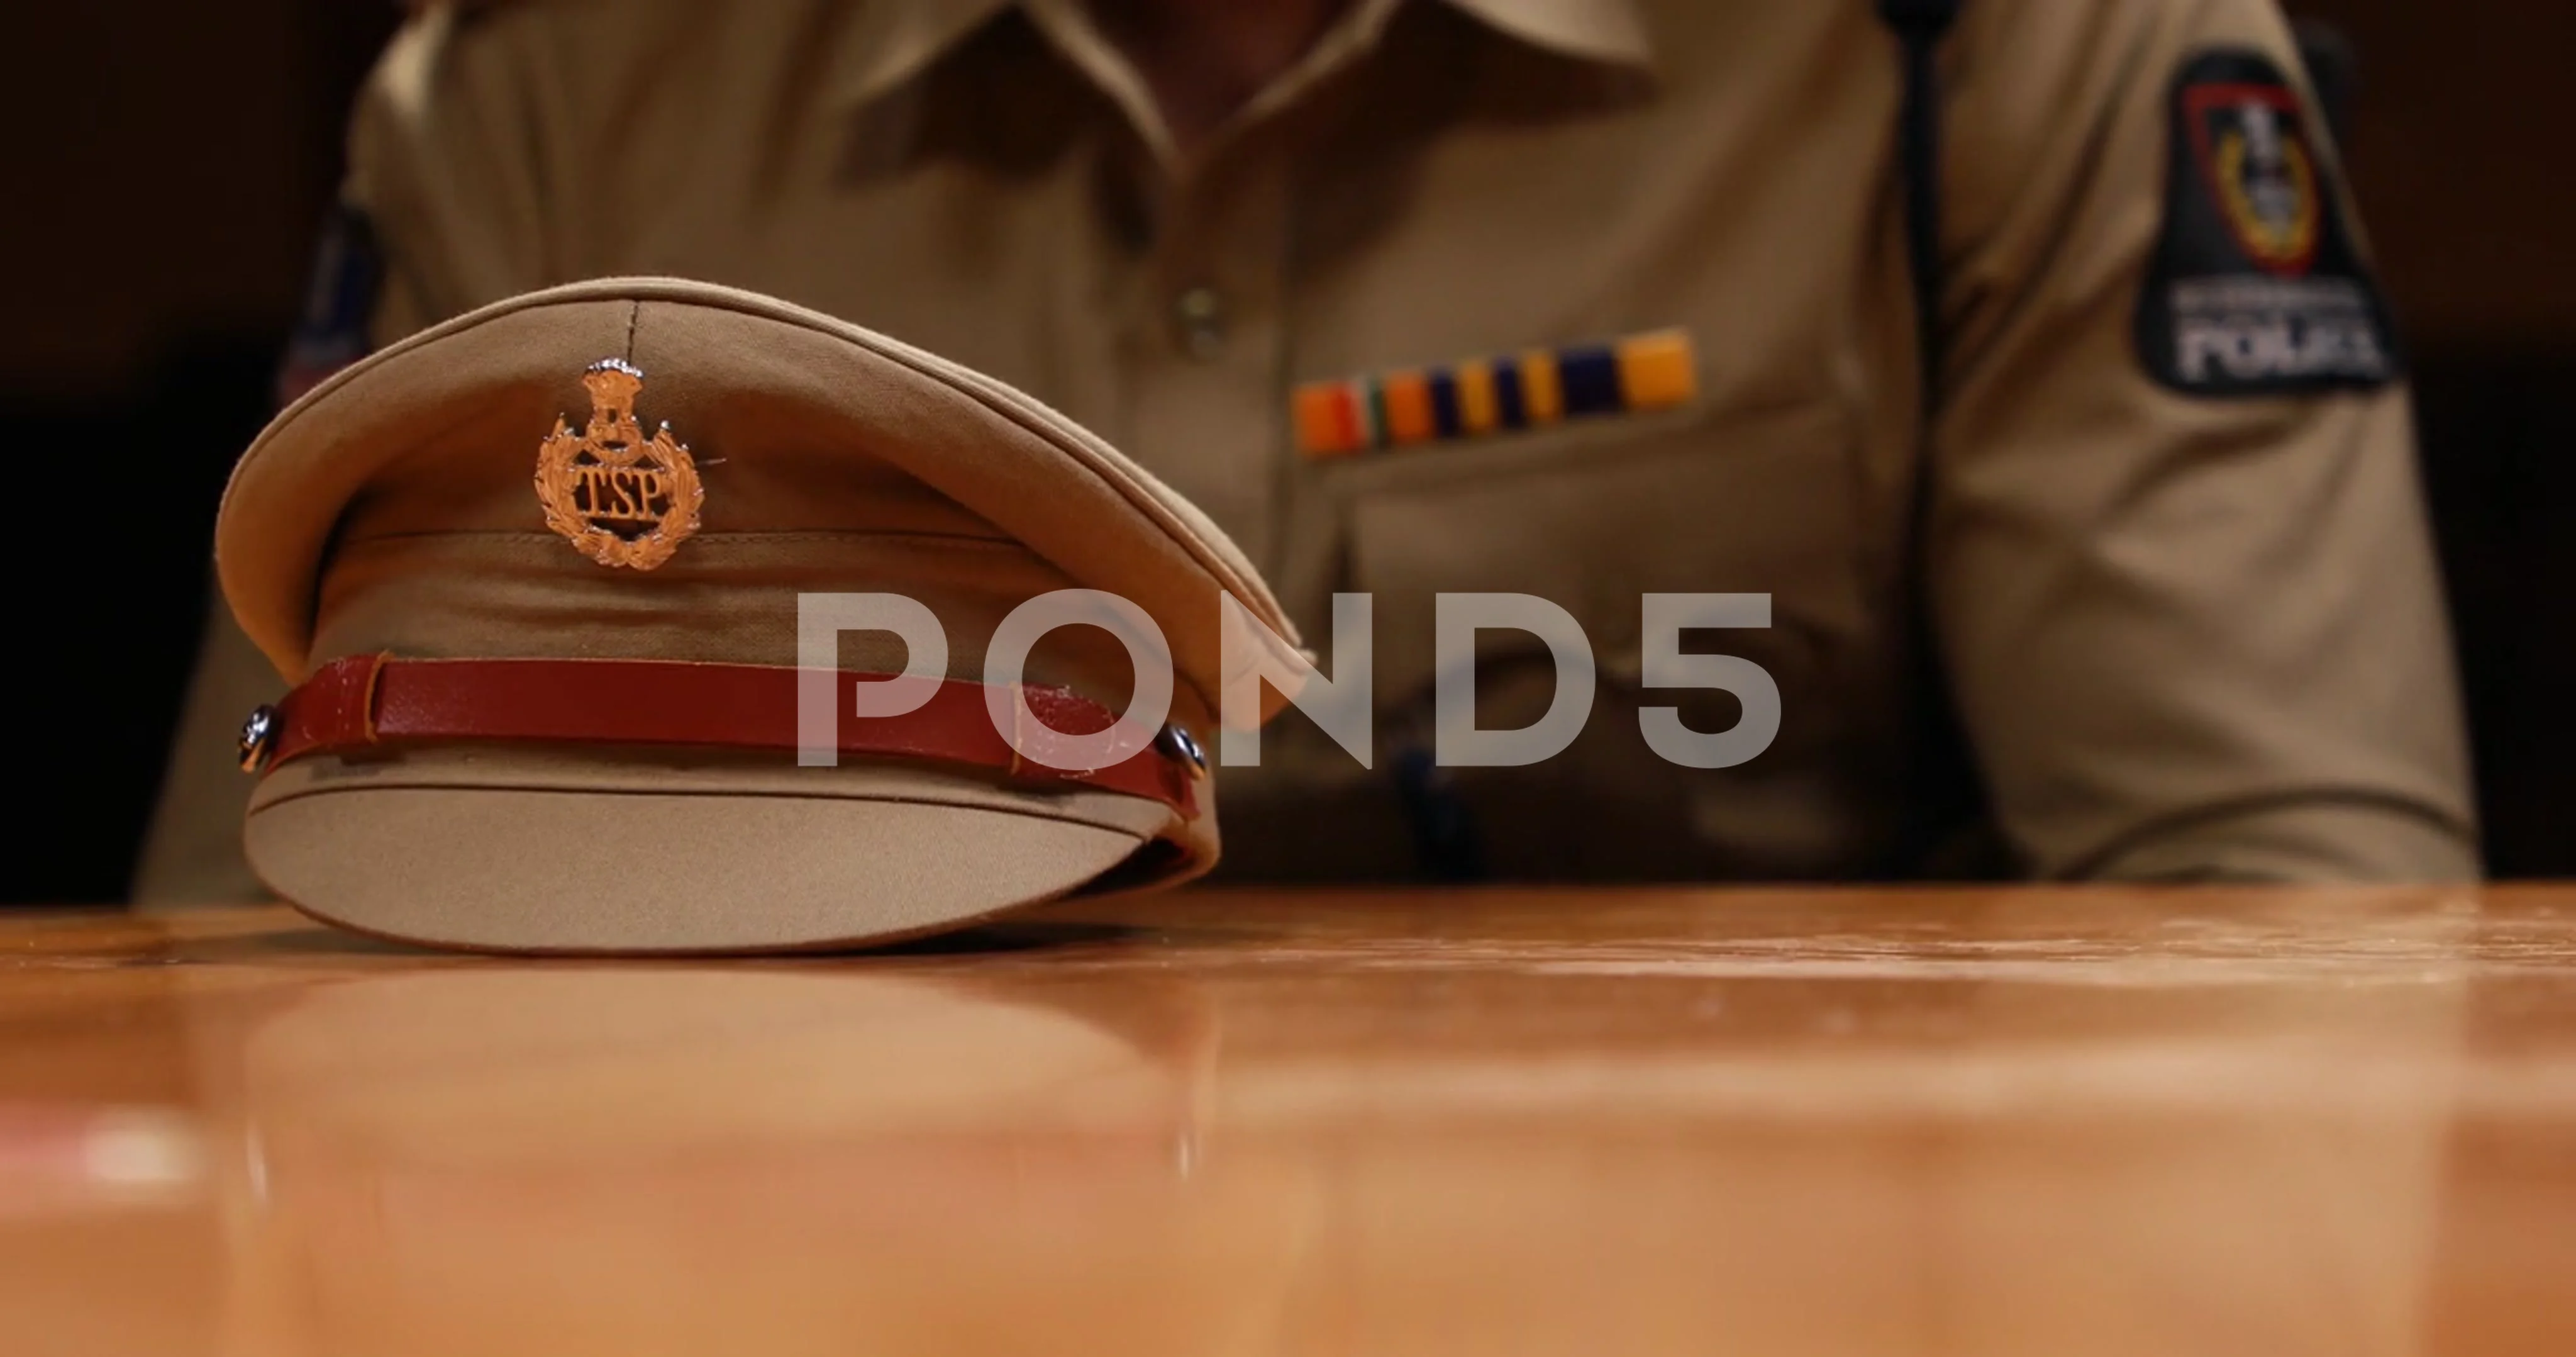 indian police inspector cap